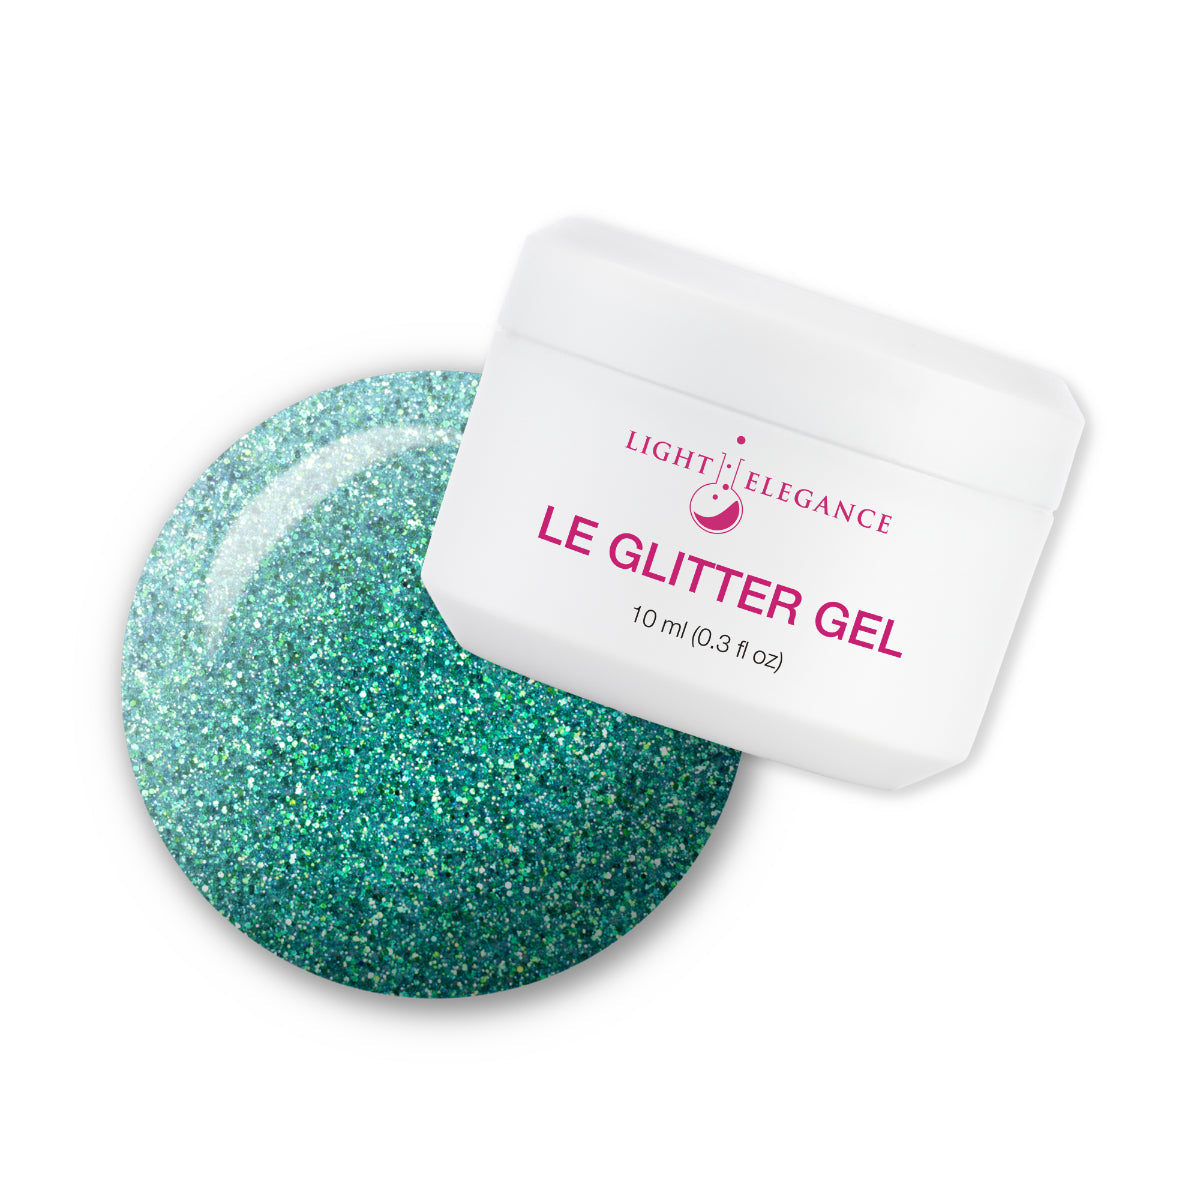 Light Elegance Glitter Gel - Standing Ovation :: New Packaging - Creata Beauty - Professional Beauty Products